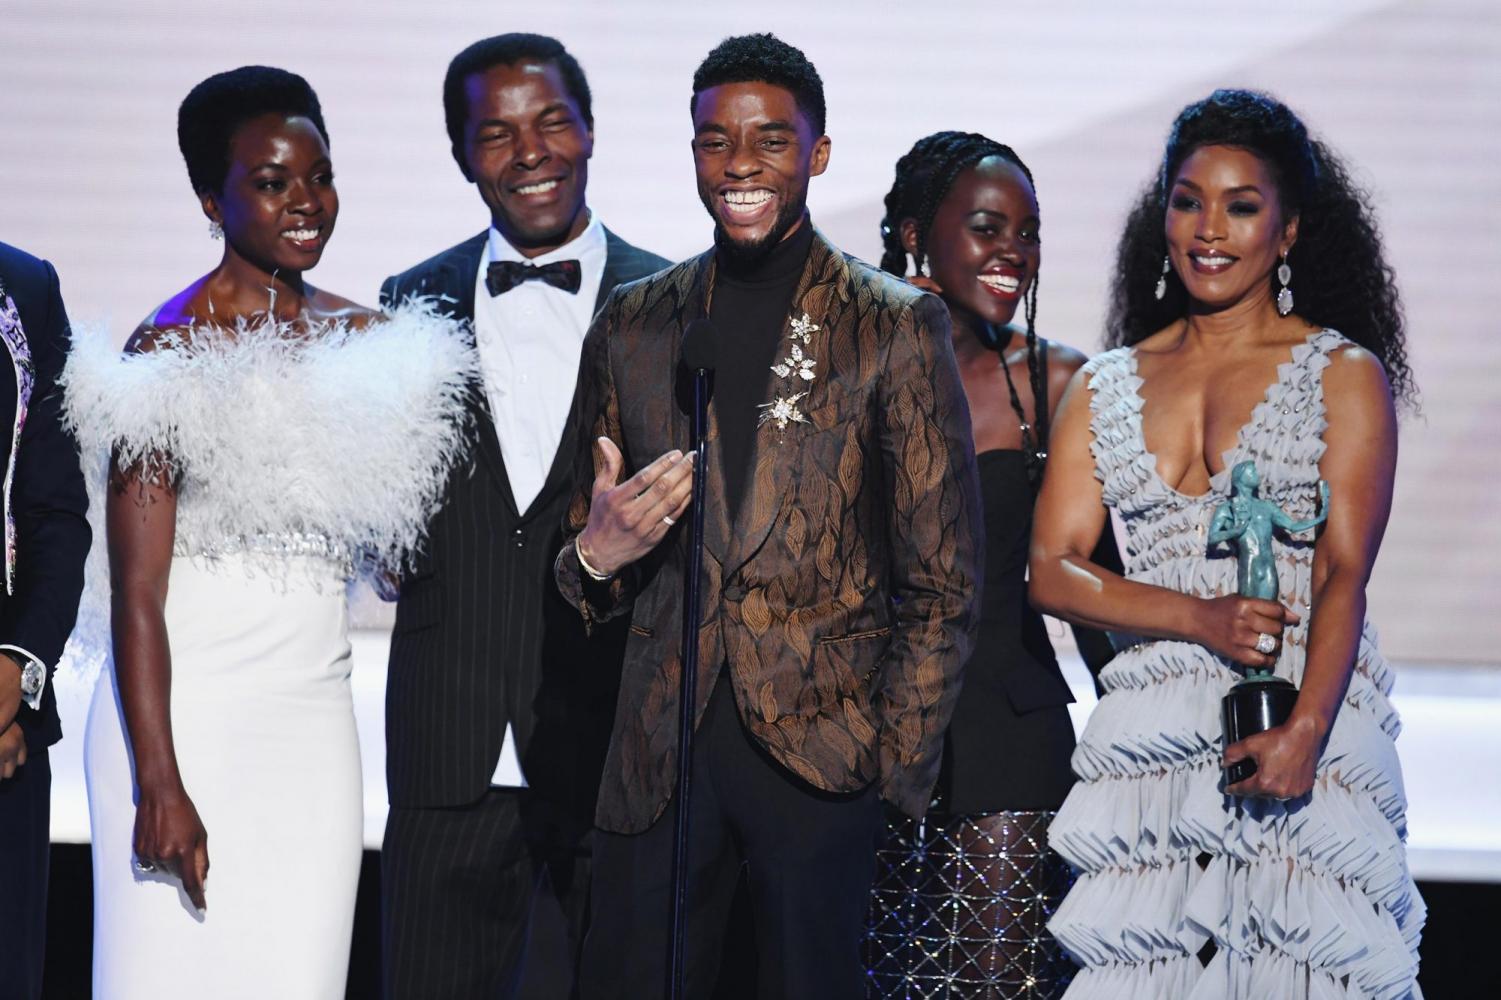 Chadwick Boseman death: Michael B Jordan says 'I wish we had more